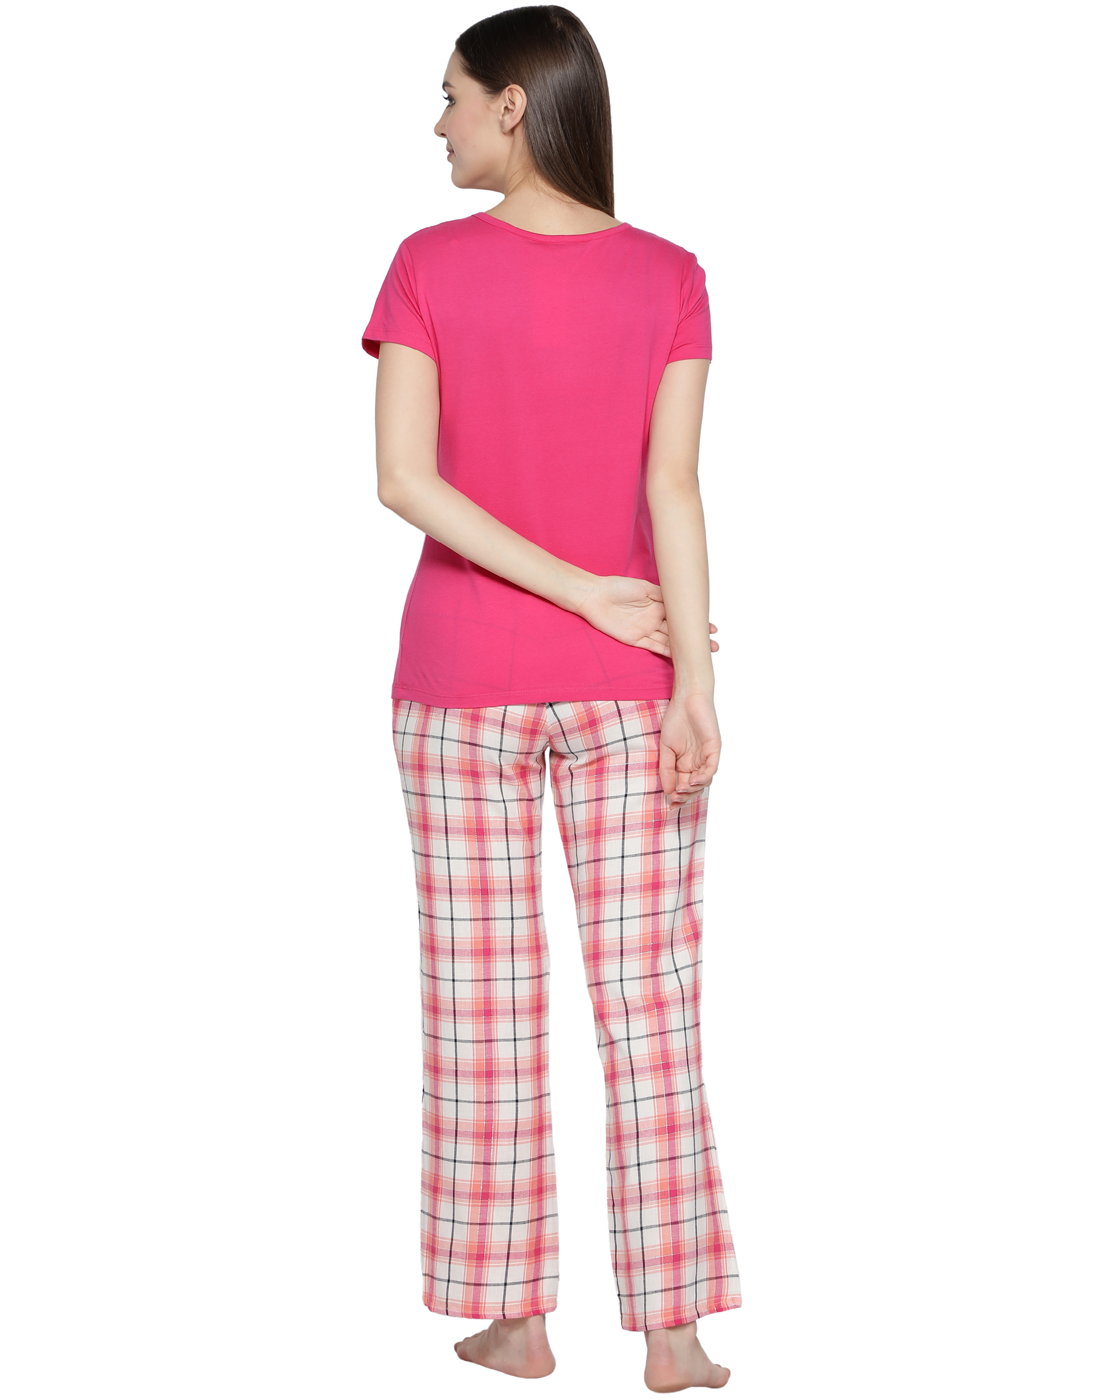 Pyjama Set for Women-White & Pink Checked